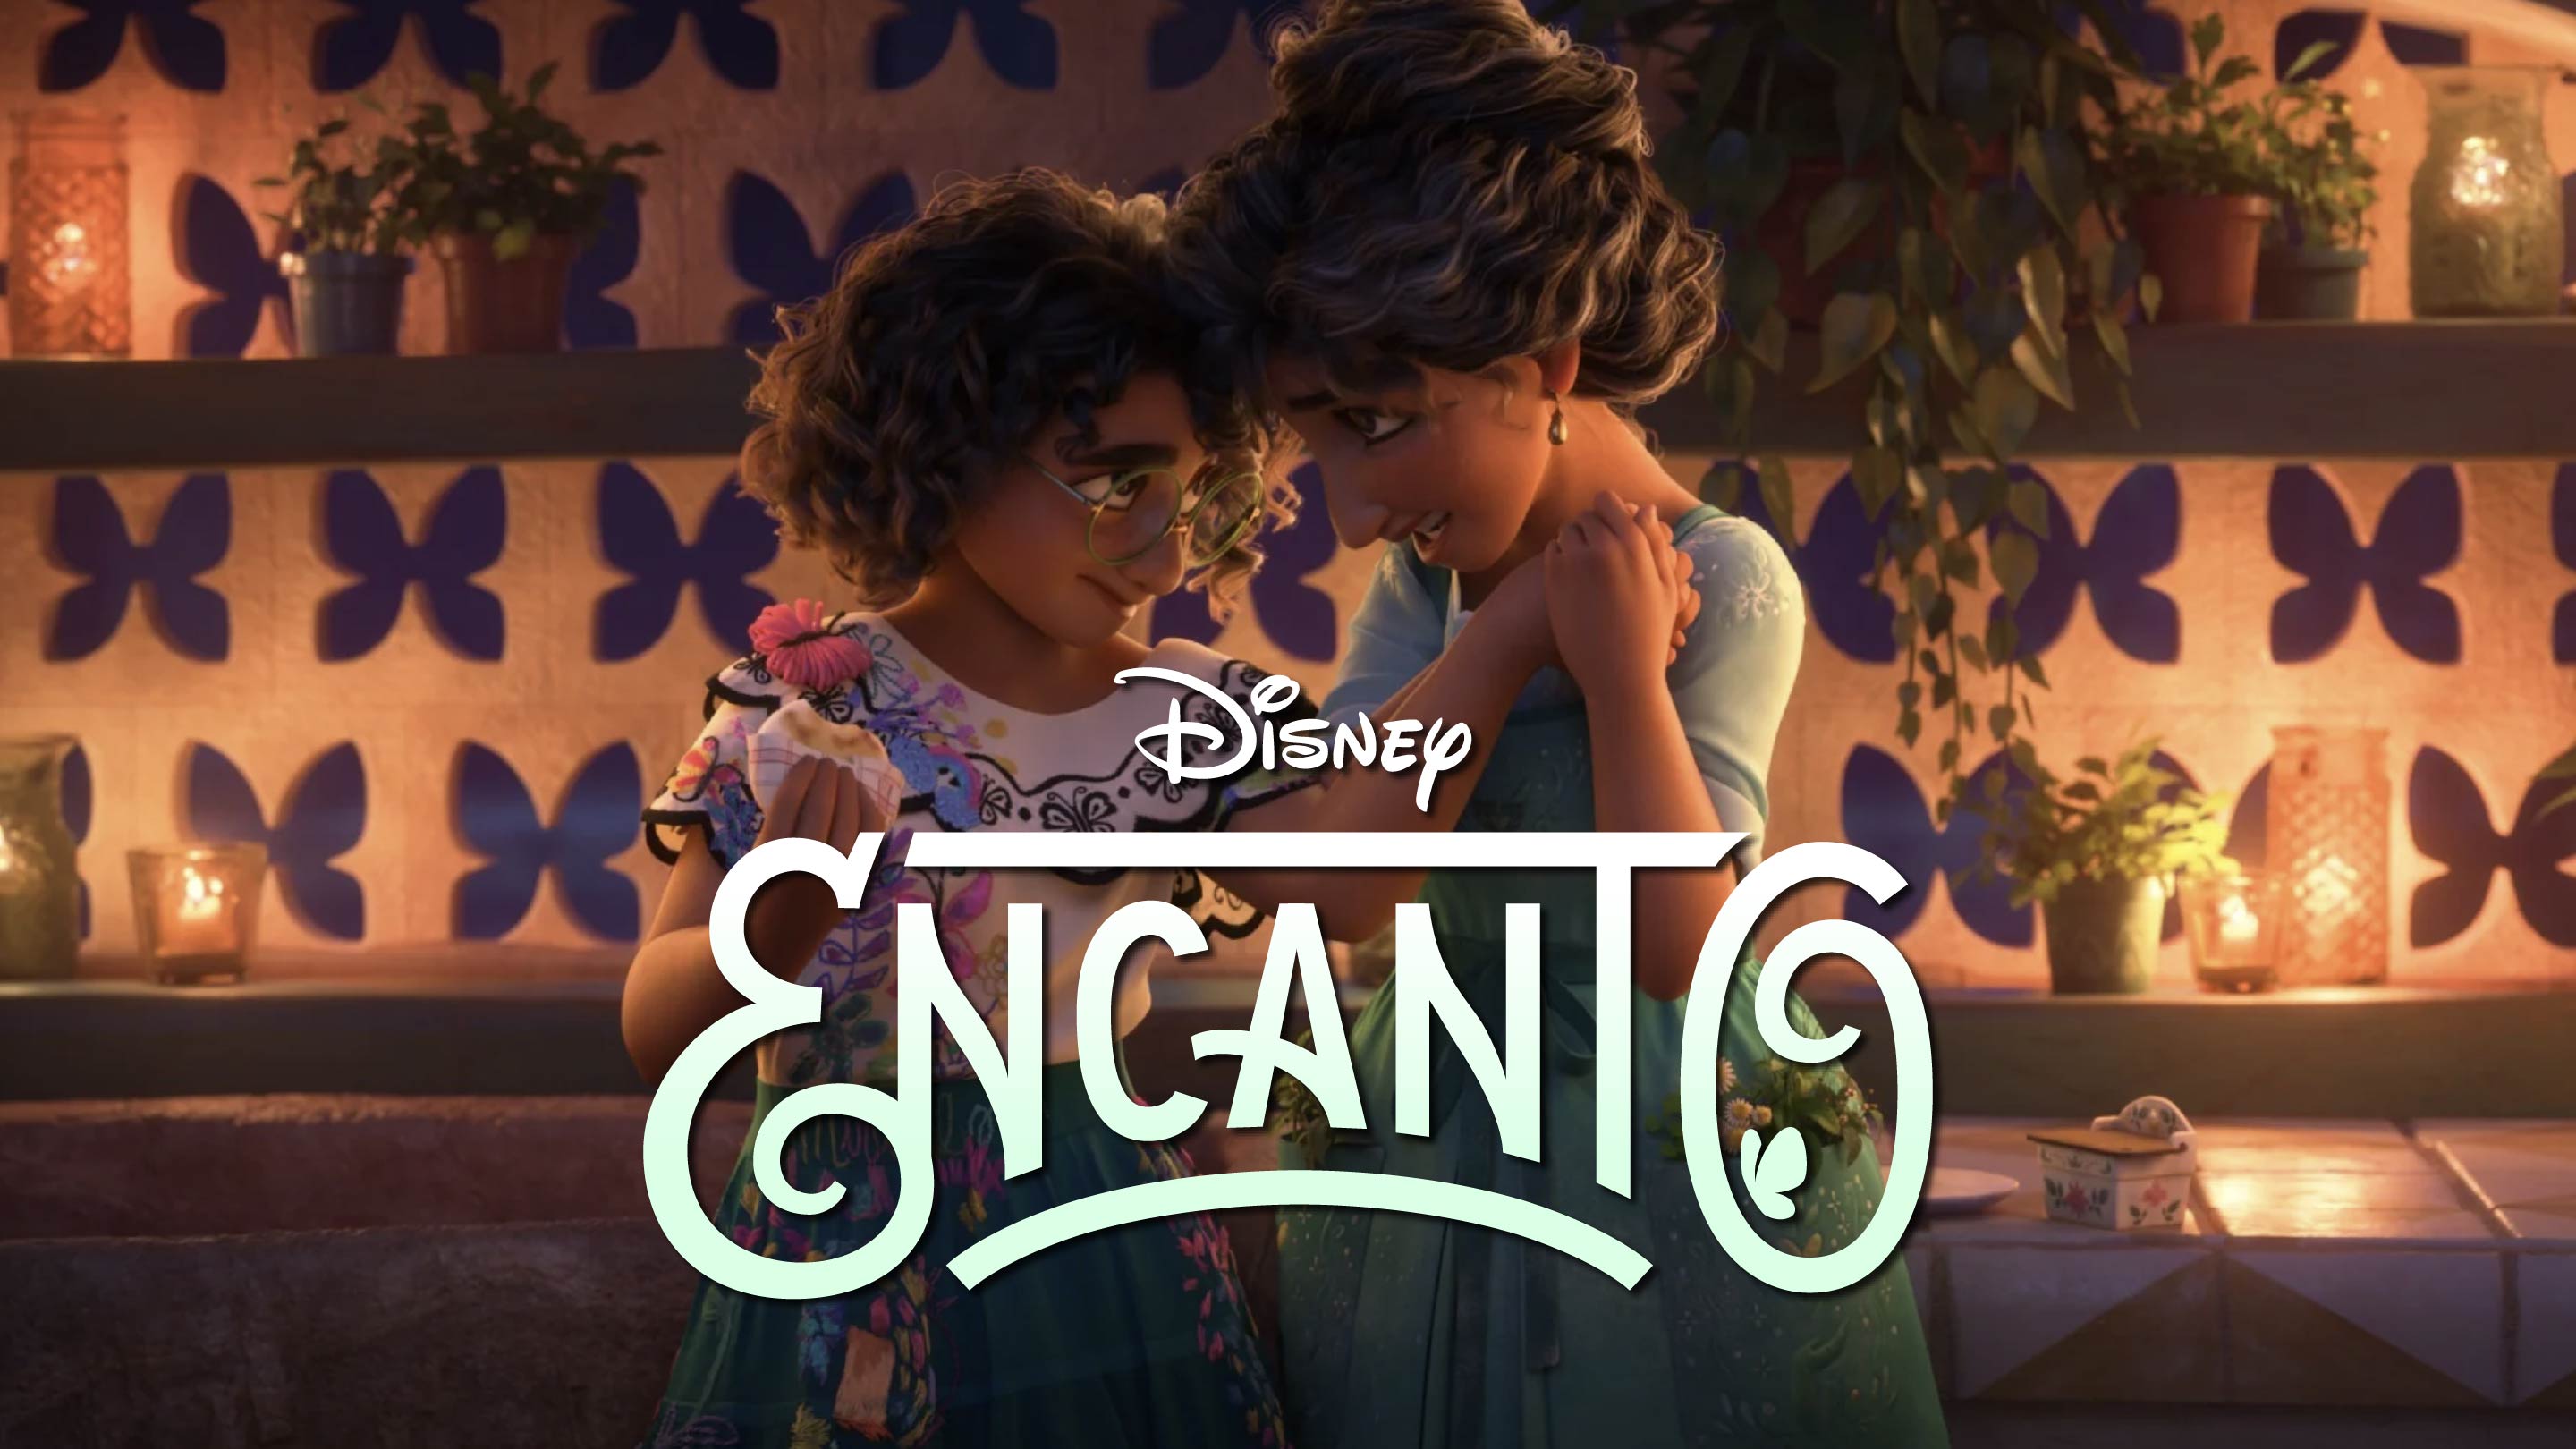 Disney Encanto Logo Title Treatment Explorations by Hoodzpah